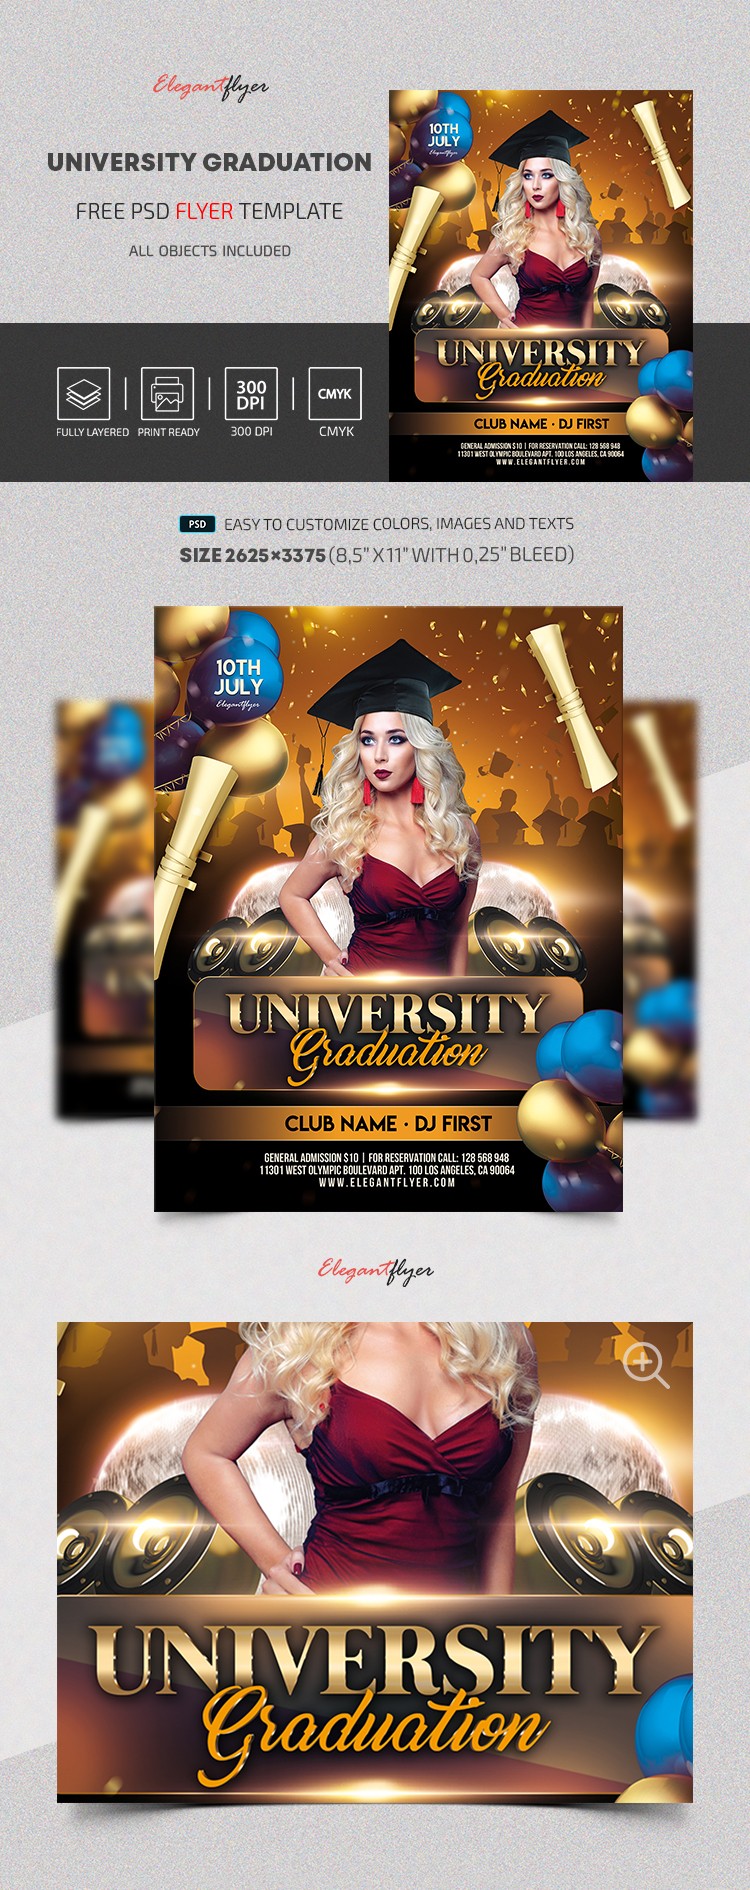 University Graduation by ElegantFlyer